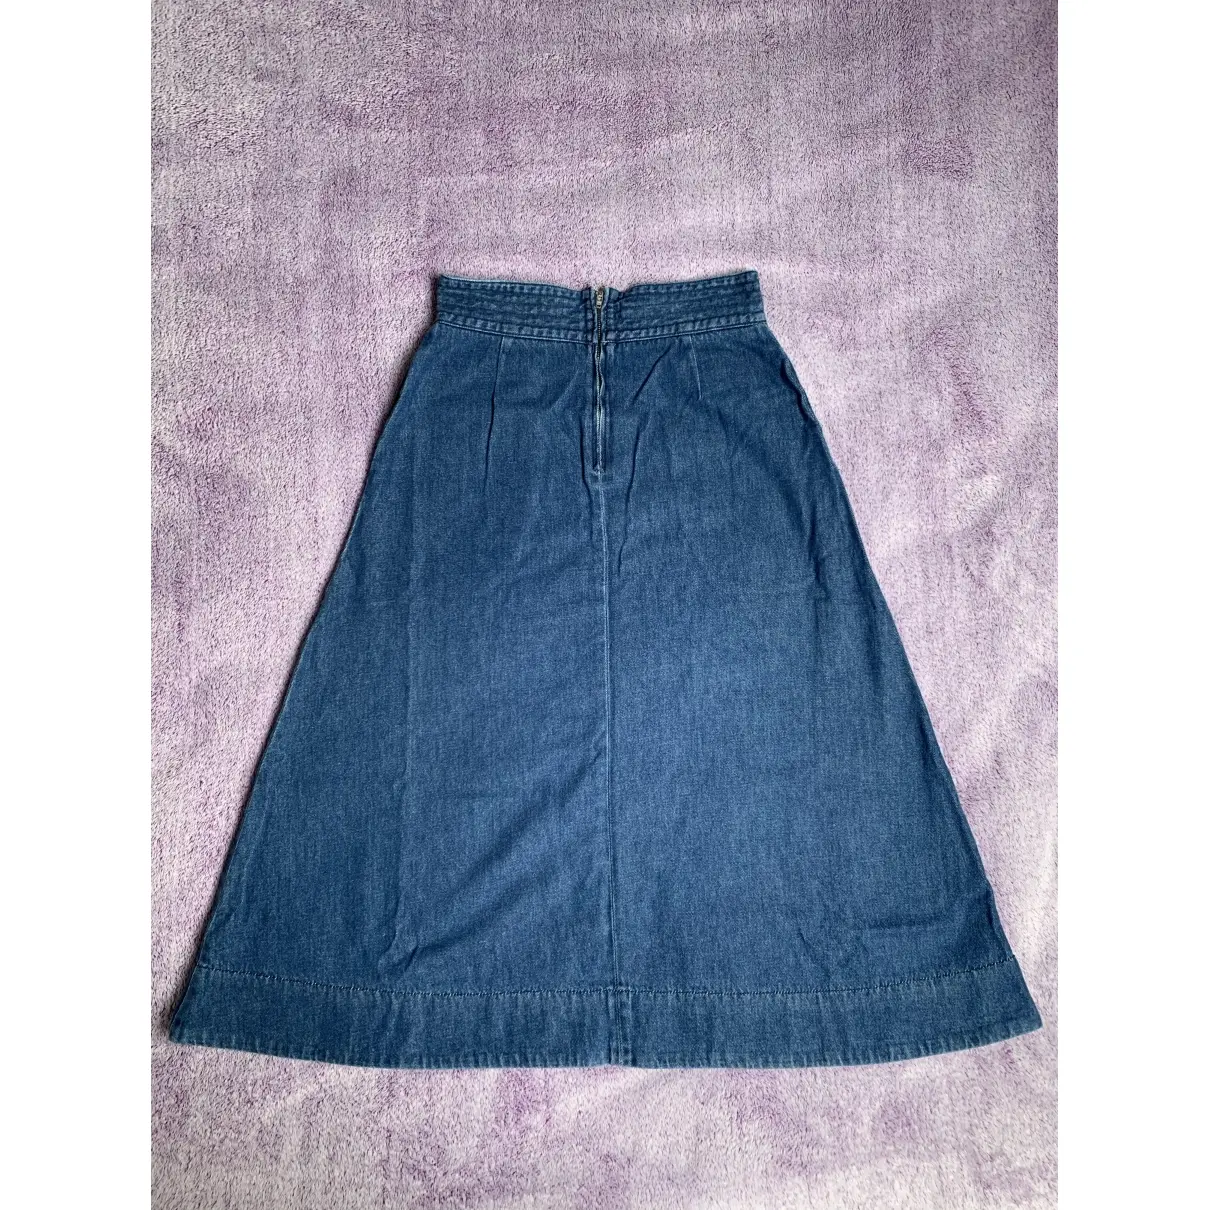 Tara Jarmon Mid-length skirt for sale